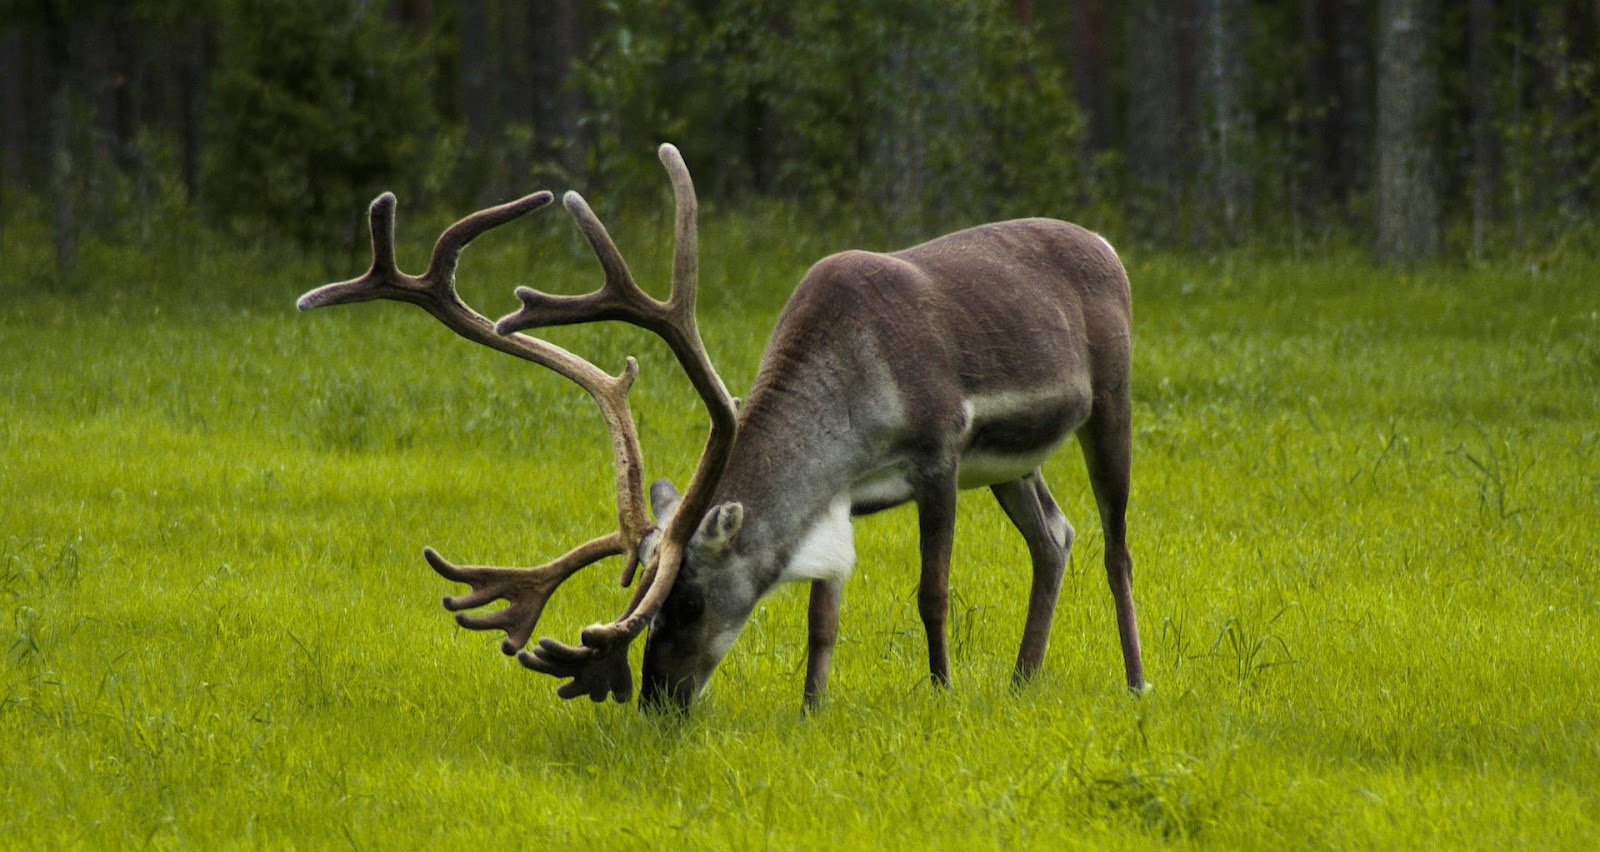 reindeer grazing in a field